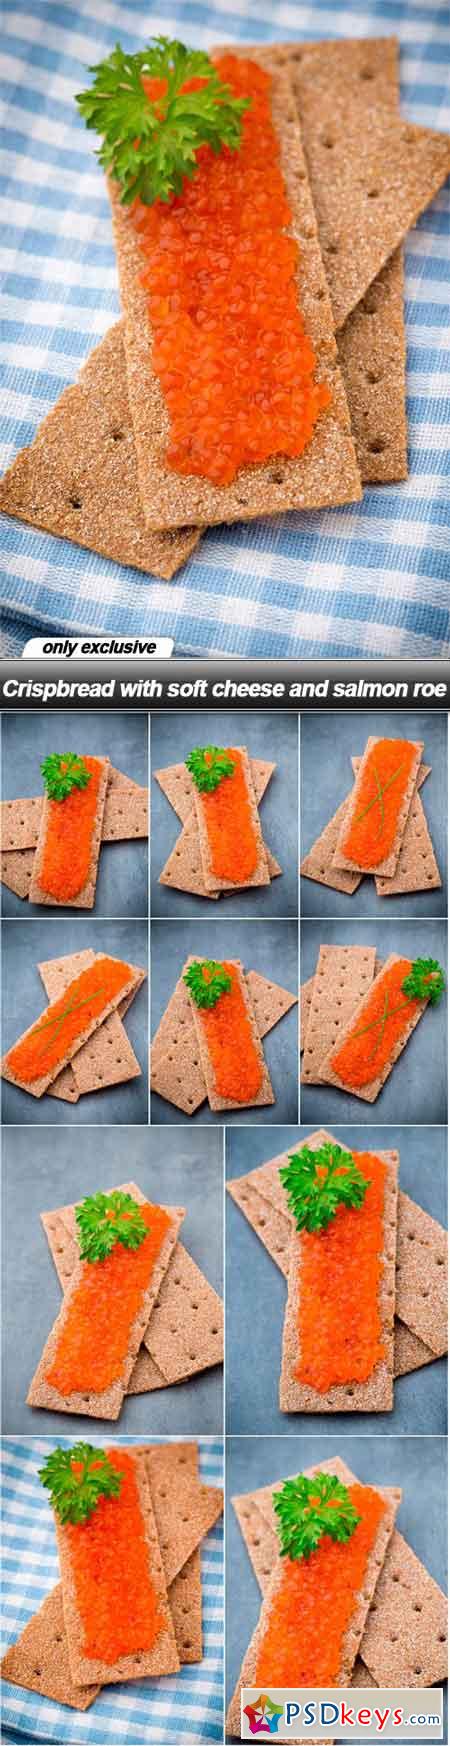 Crispbread with soft cheese and salmon roe - 10 UHQ JPEG